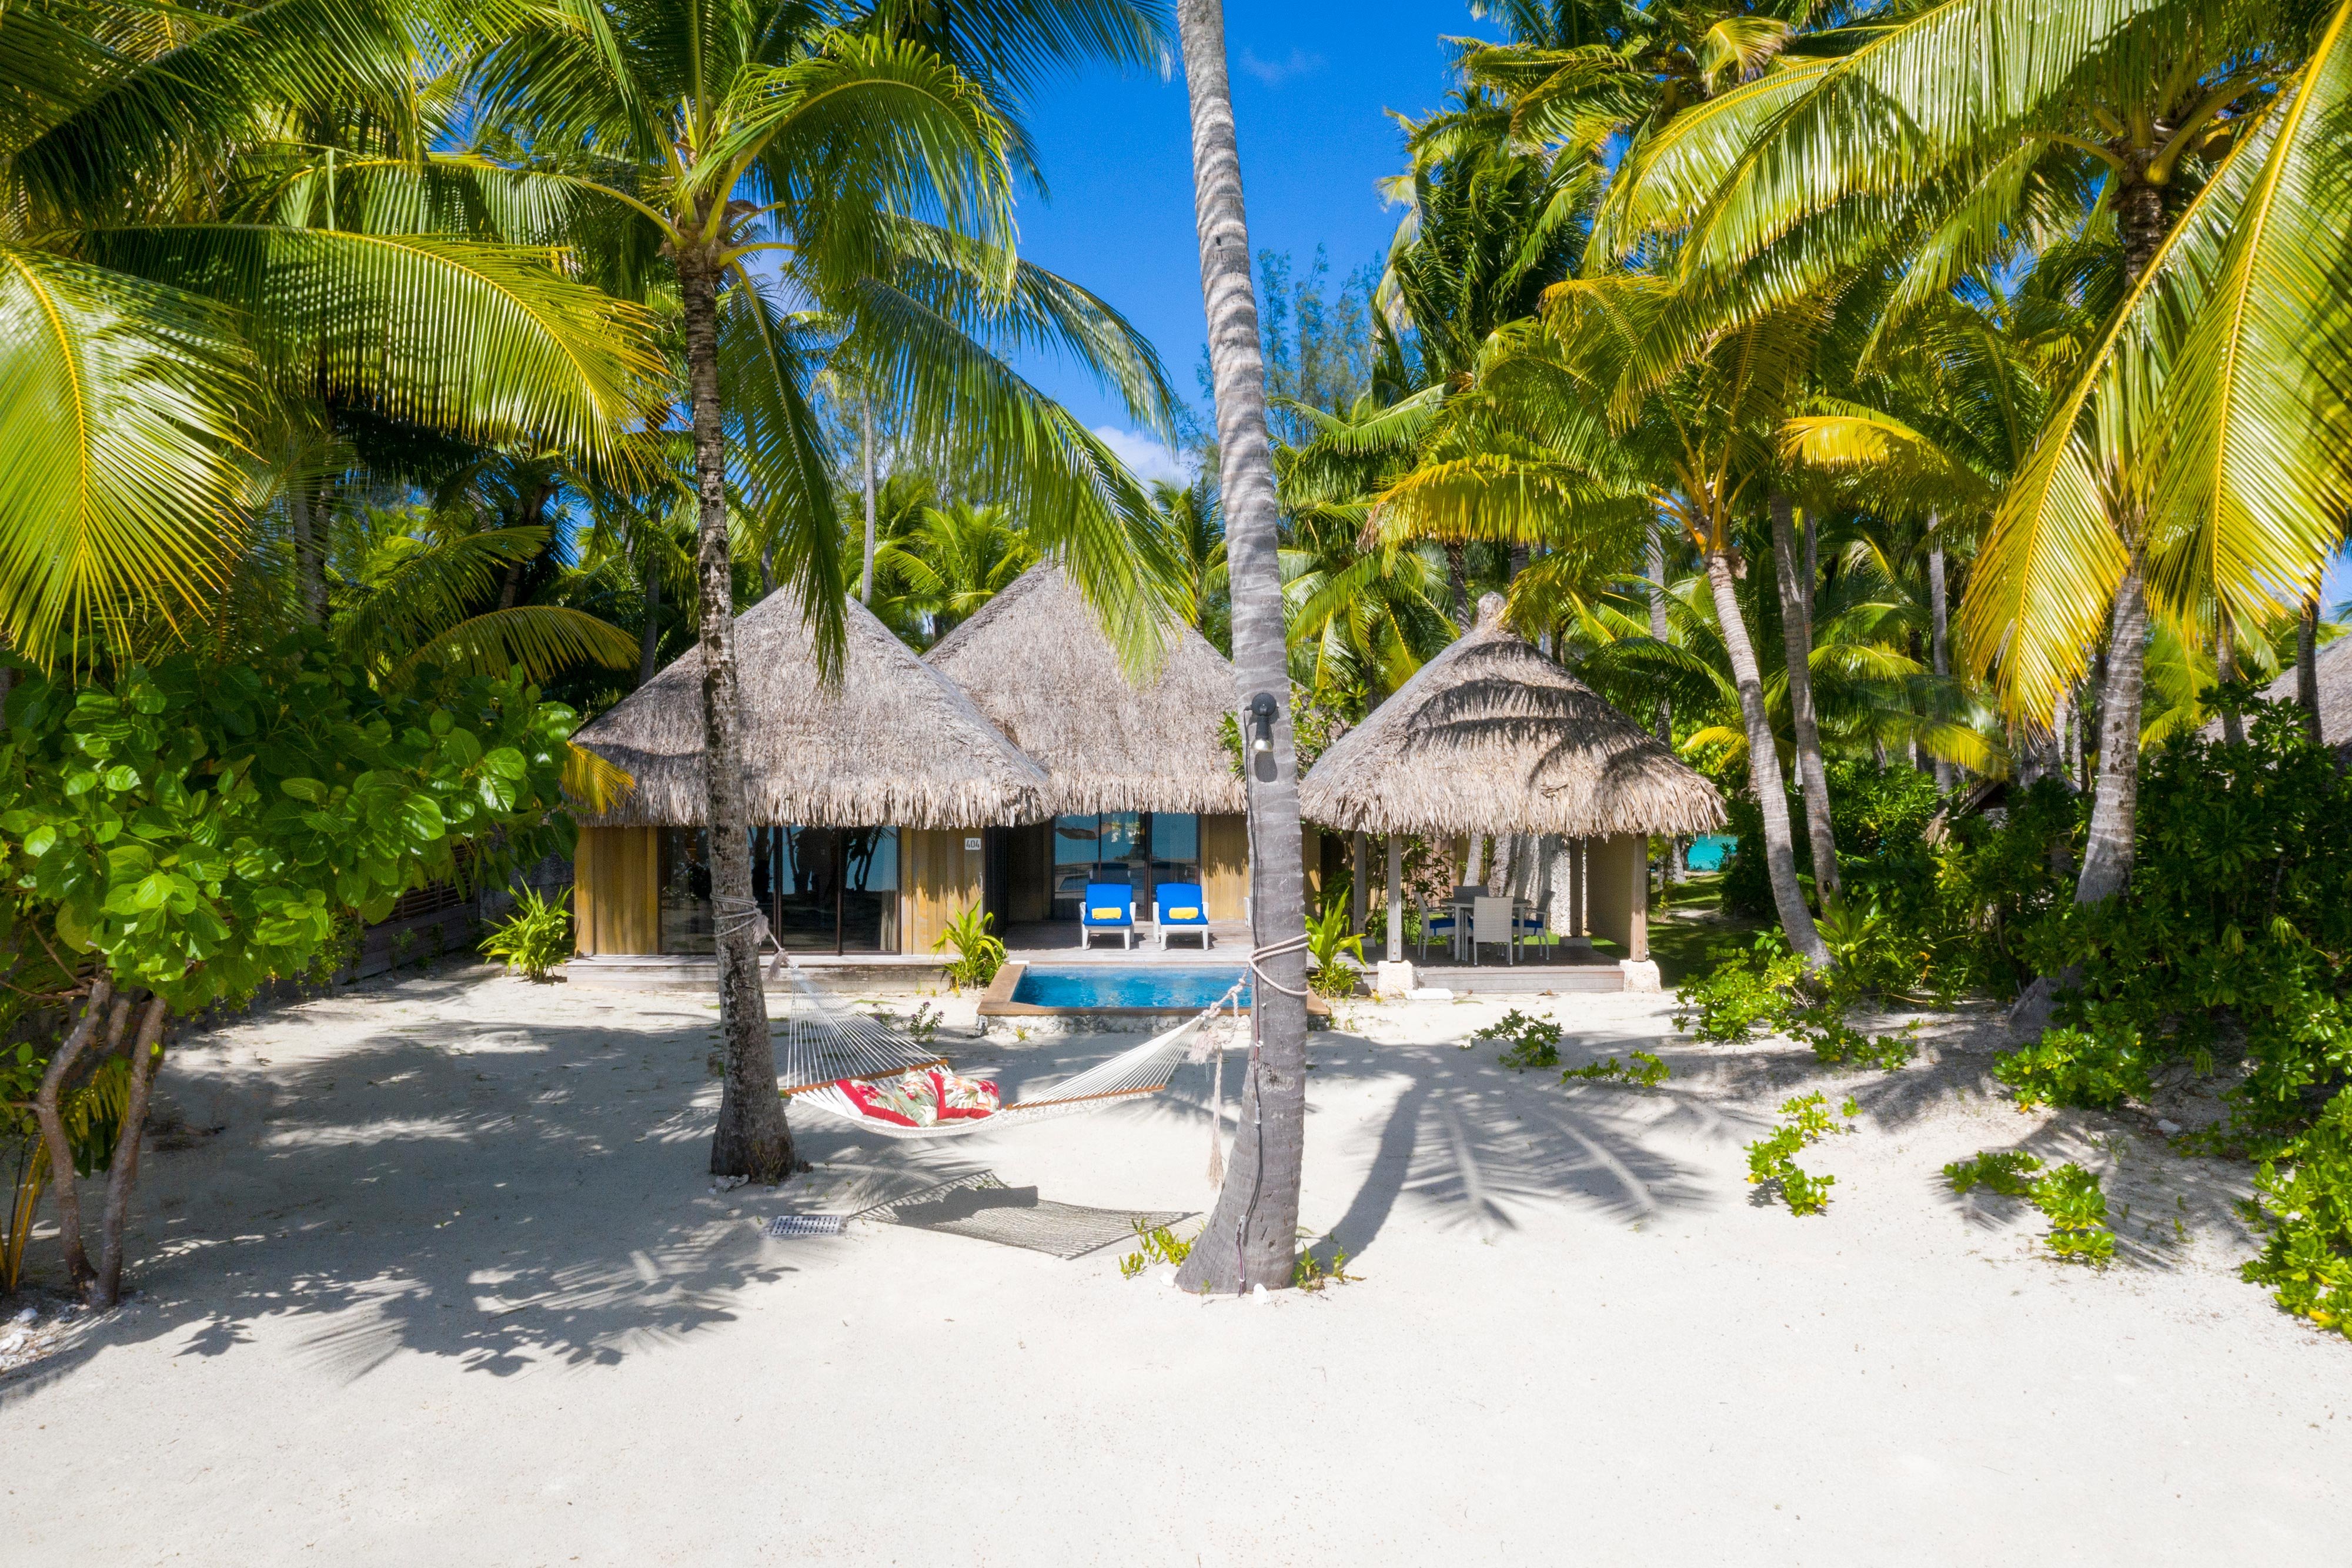 The St Regis Bora Bora Resort Deluxe Bora Bora Society Islands French Polynesia Hotels Gds Reservation Codes Travel Weekly